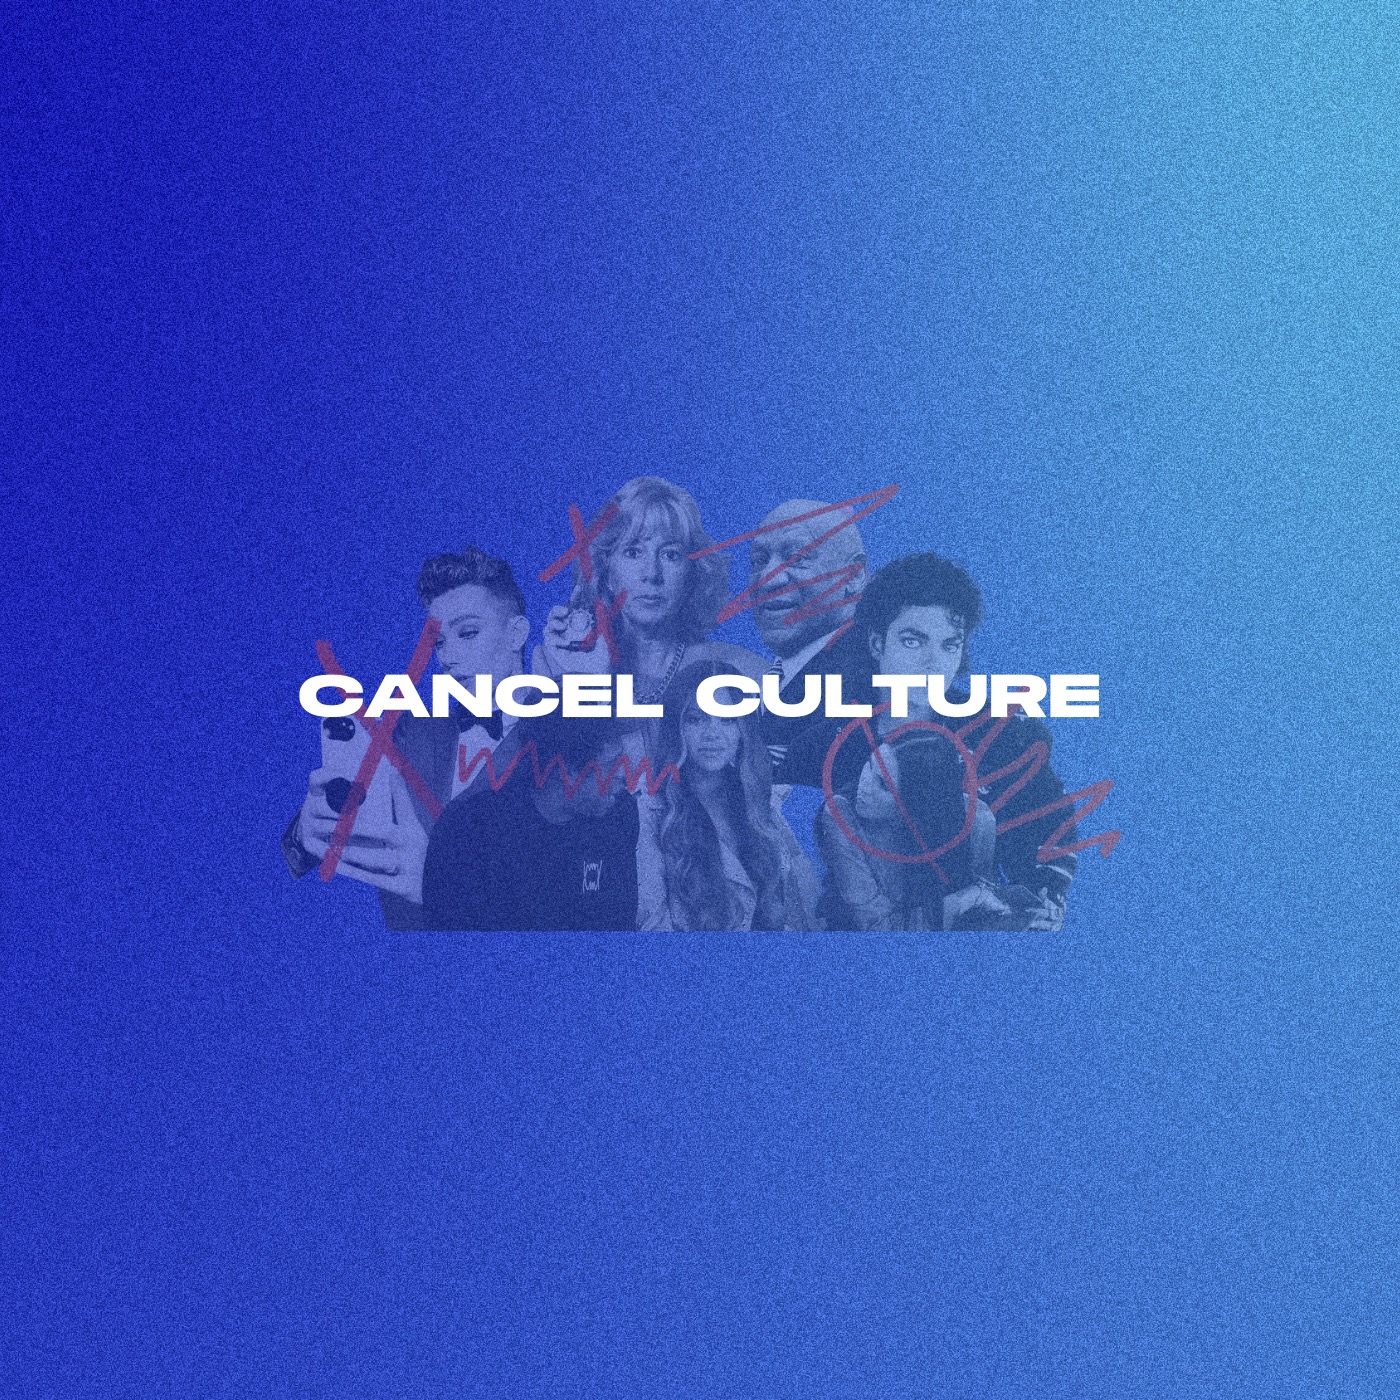 Cancel Culture. Rest.